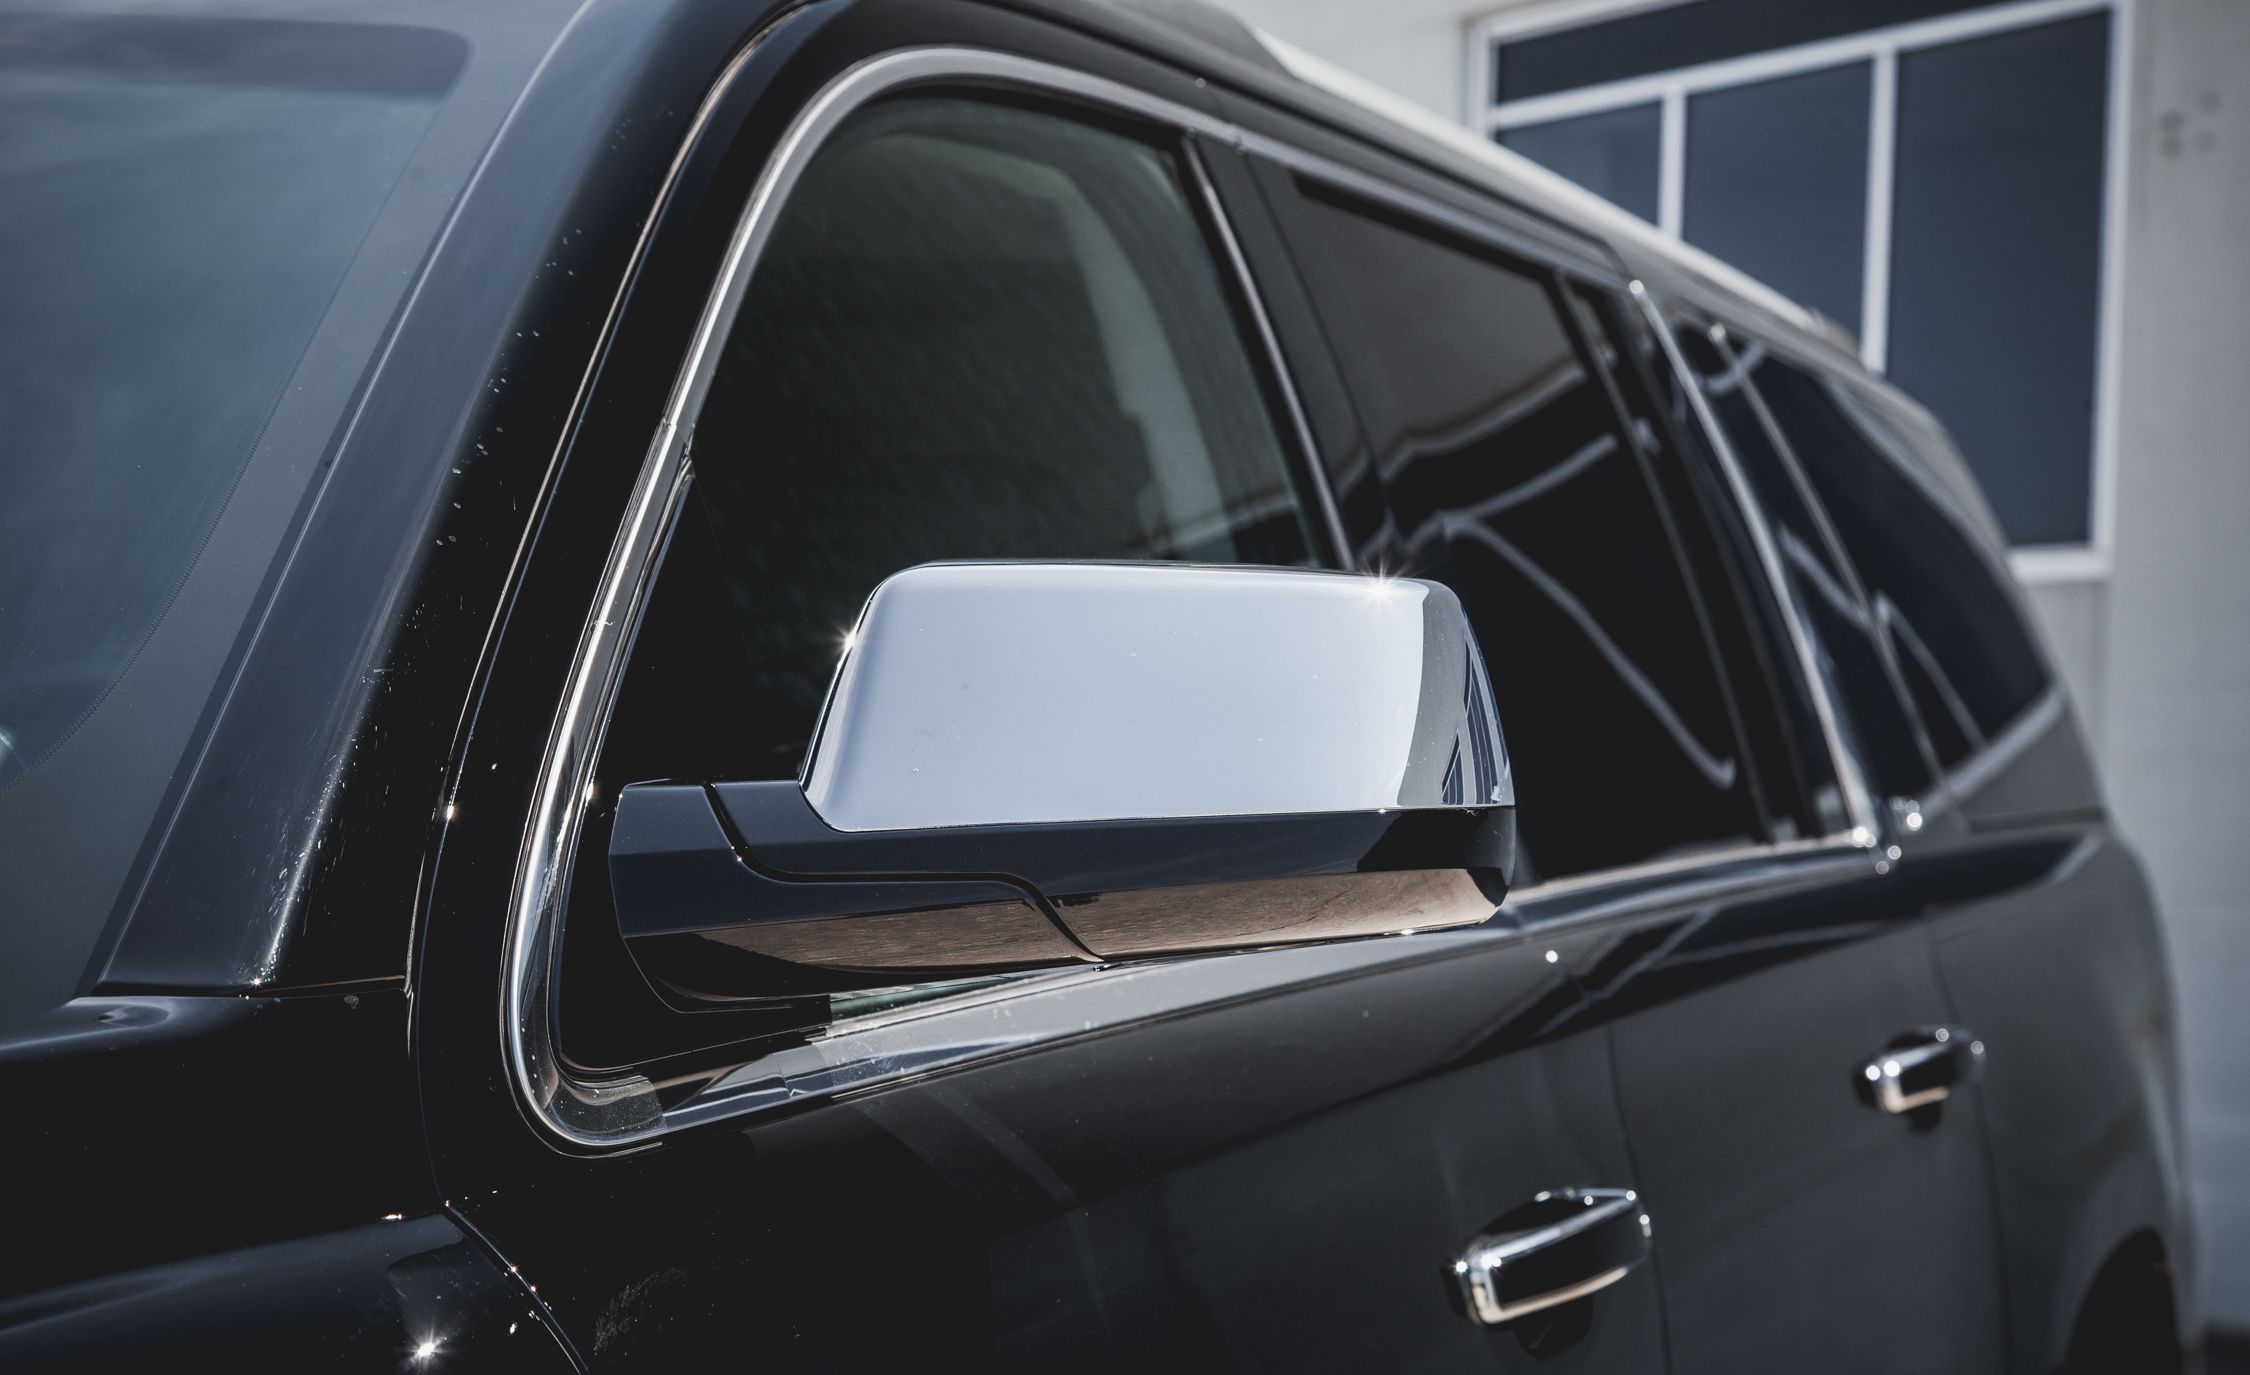 2015 Chevrolet Suburban LTZ Side View Mirror (View 30 of 33)